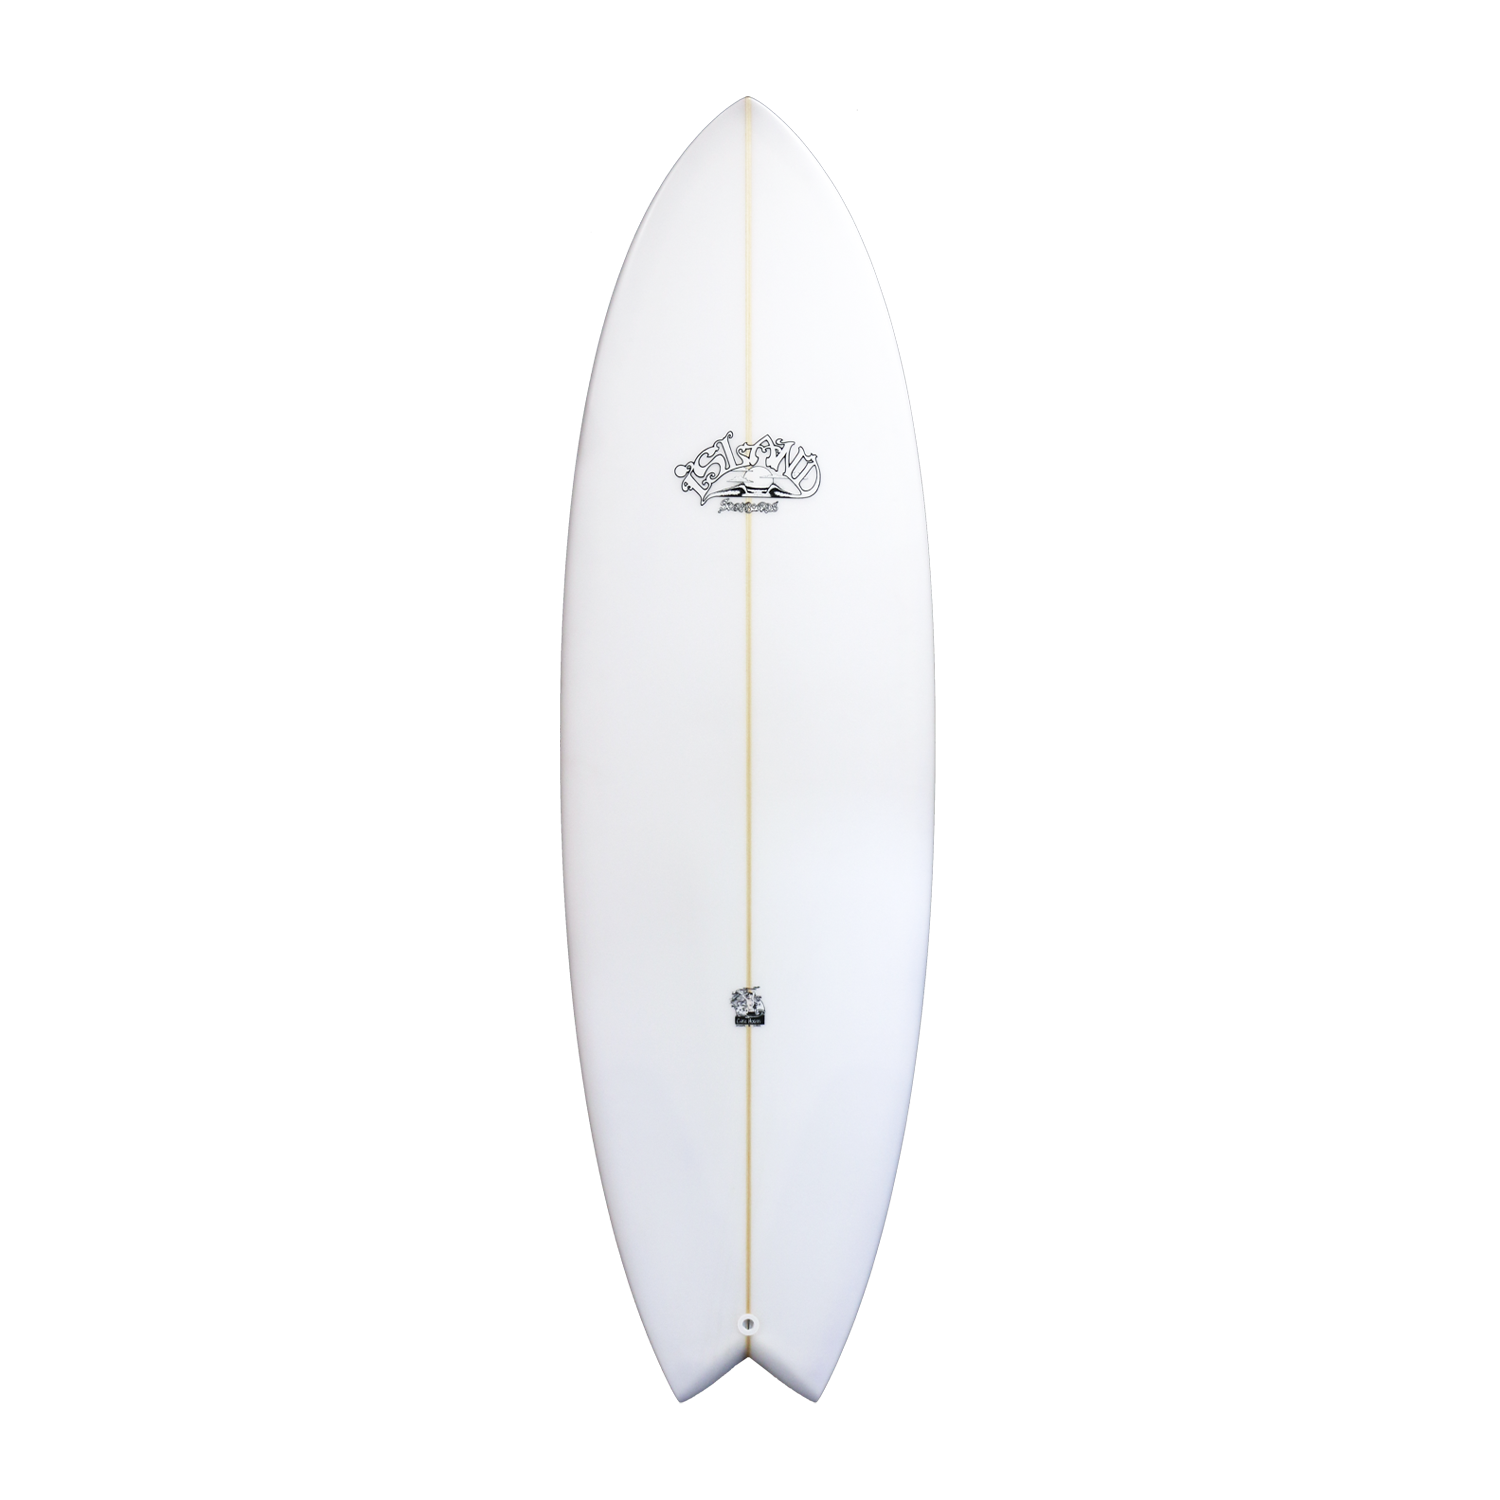 THE TWIN — Island Surfboards